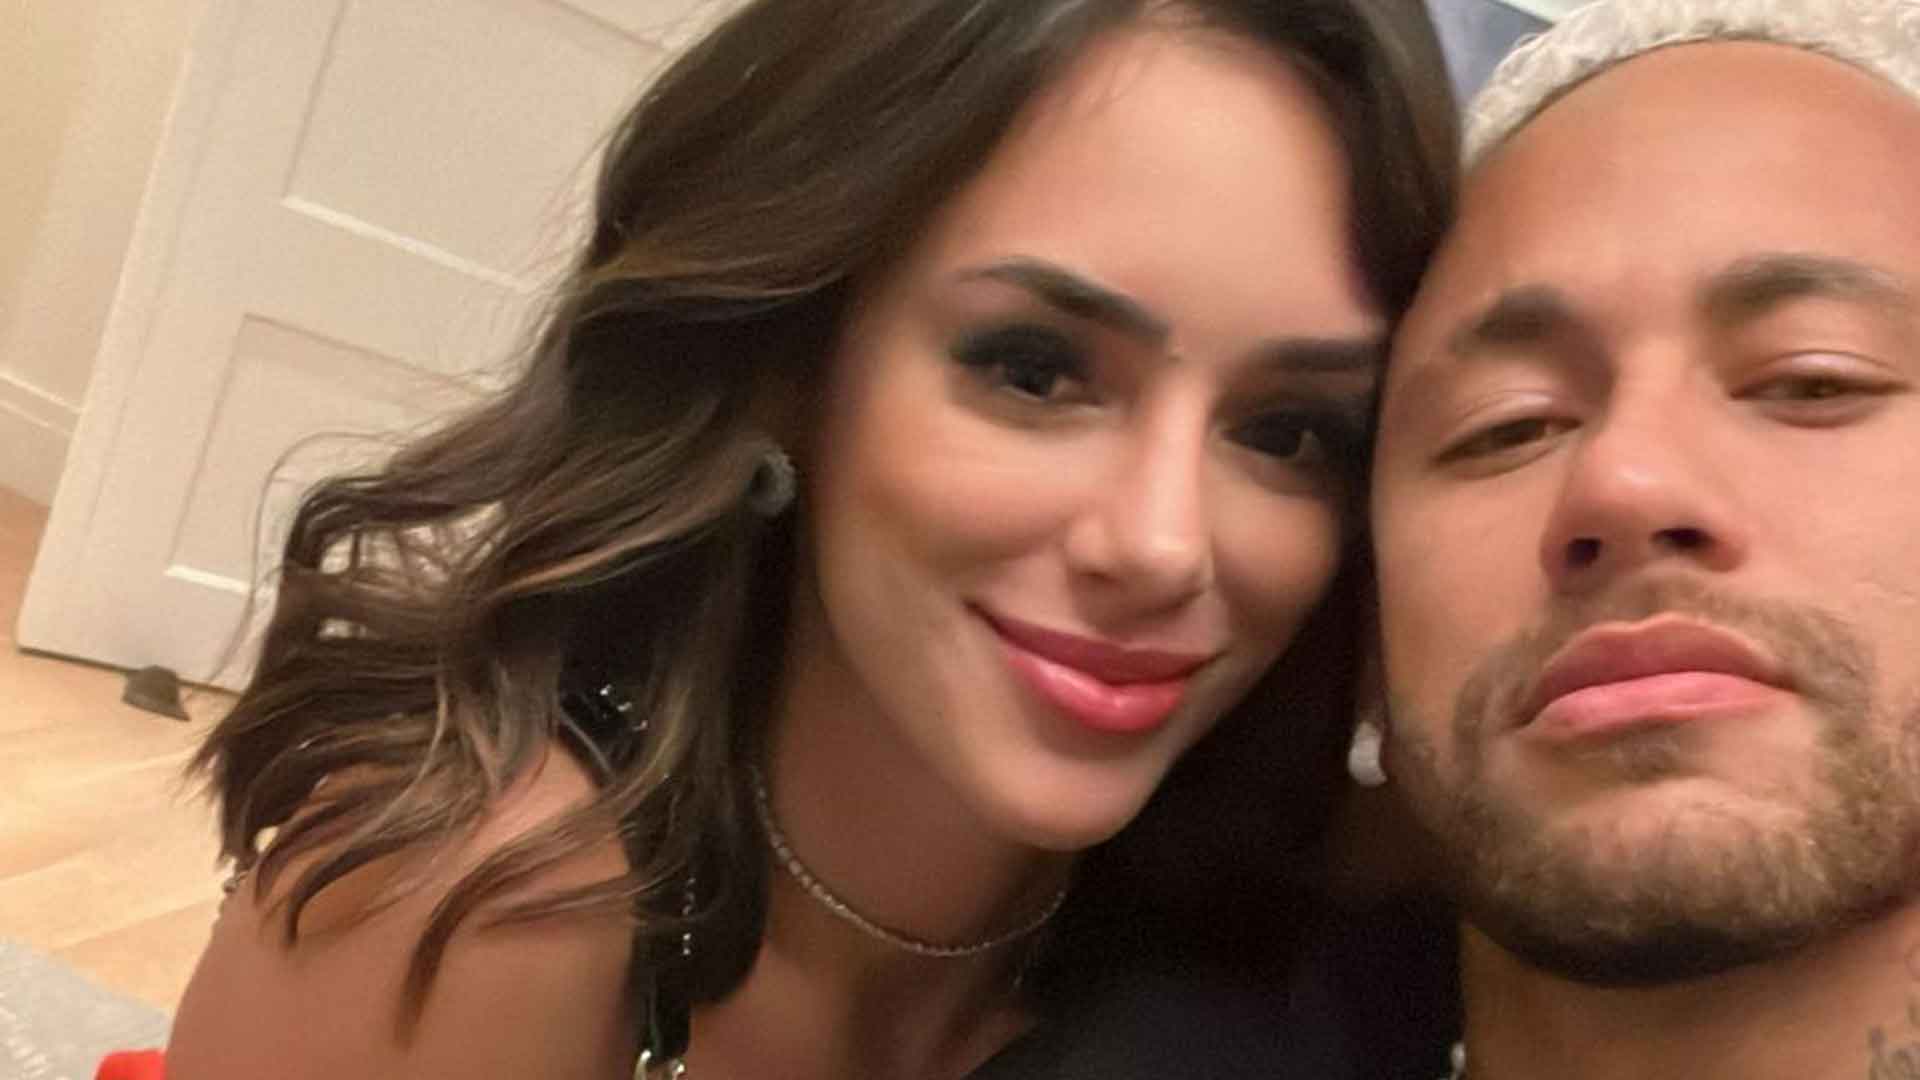 Amigos avisados, vasectomia e vidente: os bastidores da possível gravidez da namorada de Neymar